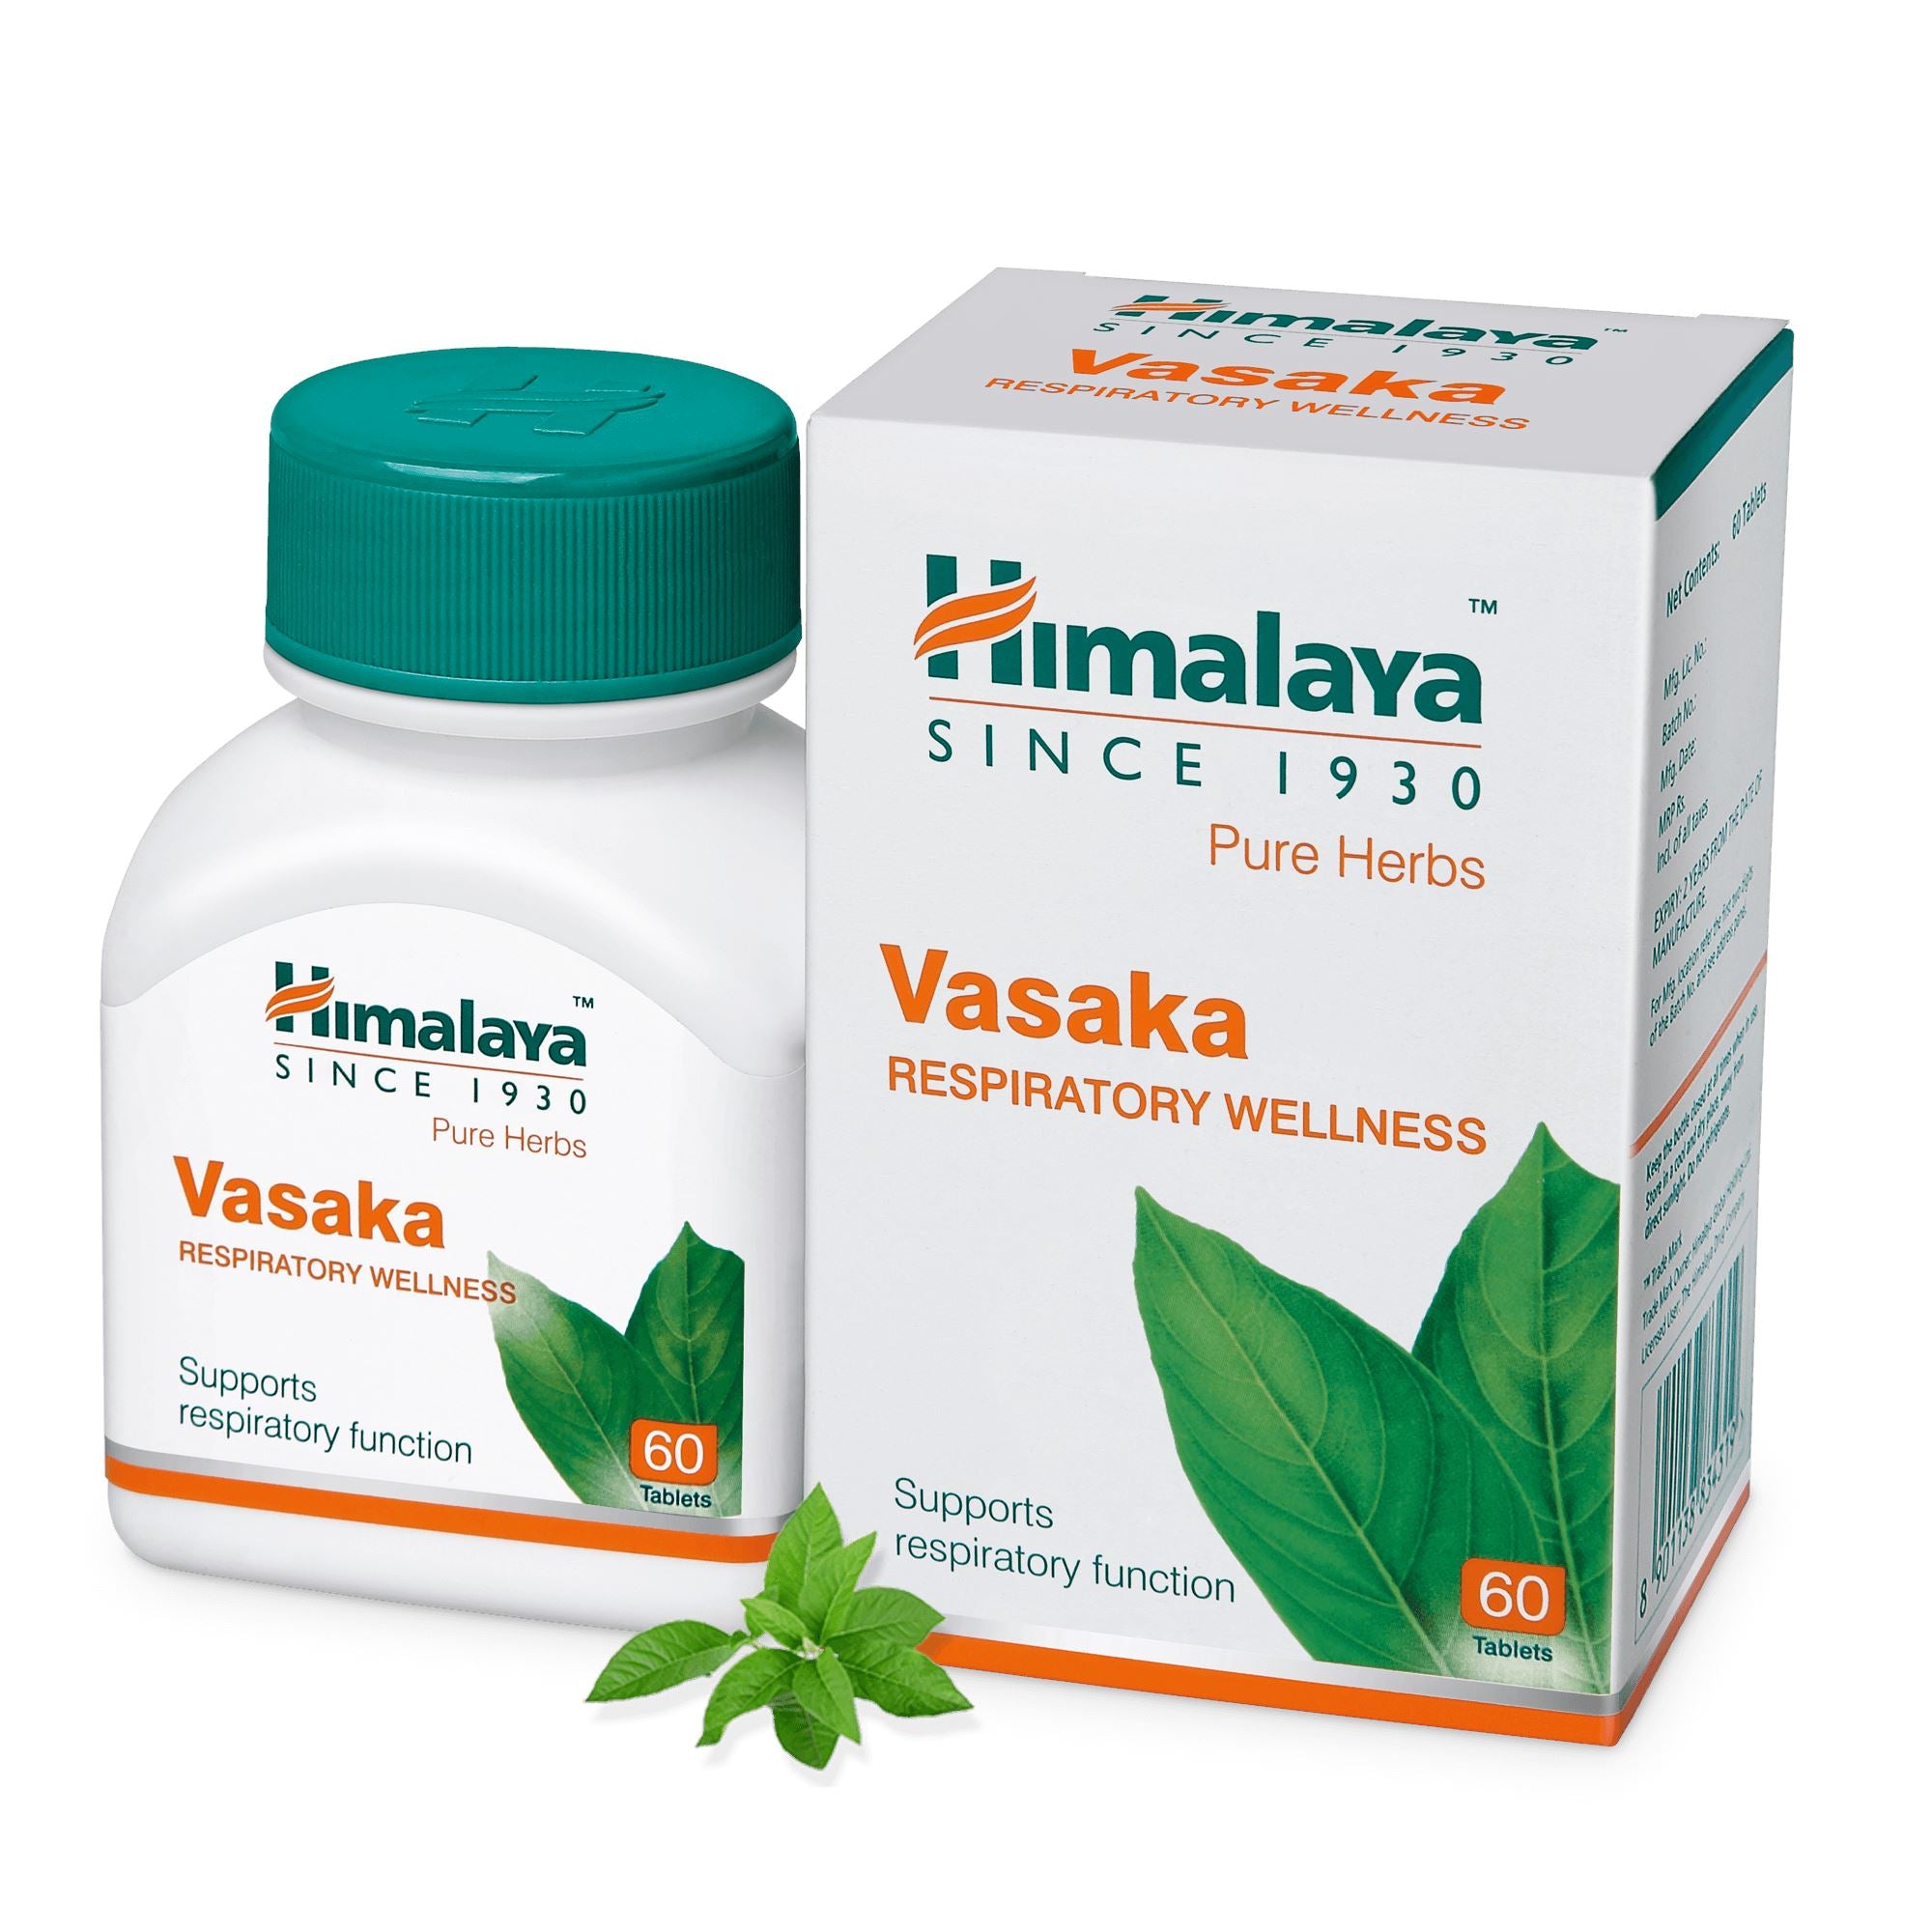 Himalaya Vasaka - Effective respiratory care